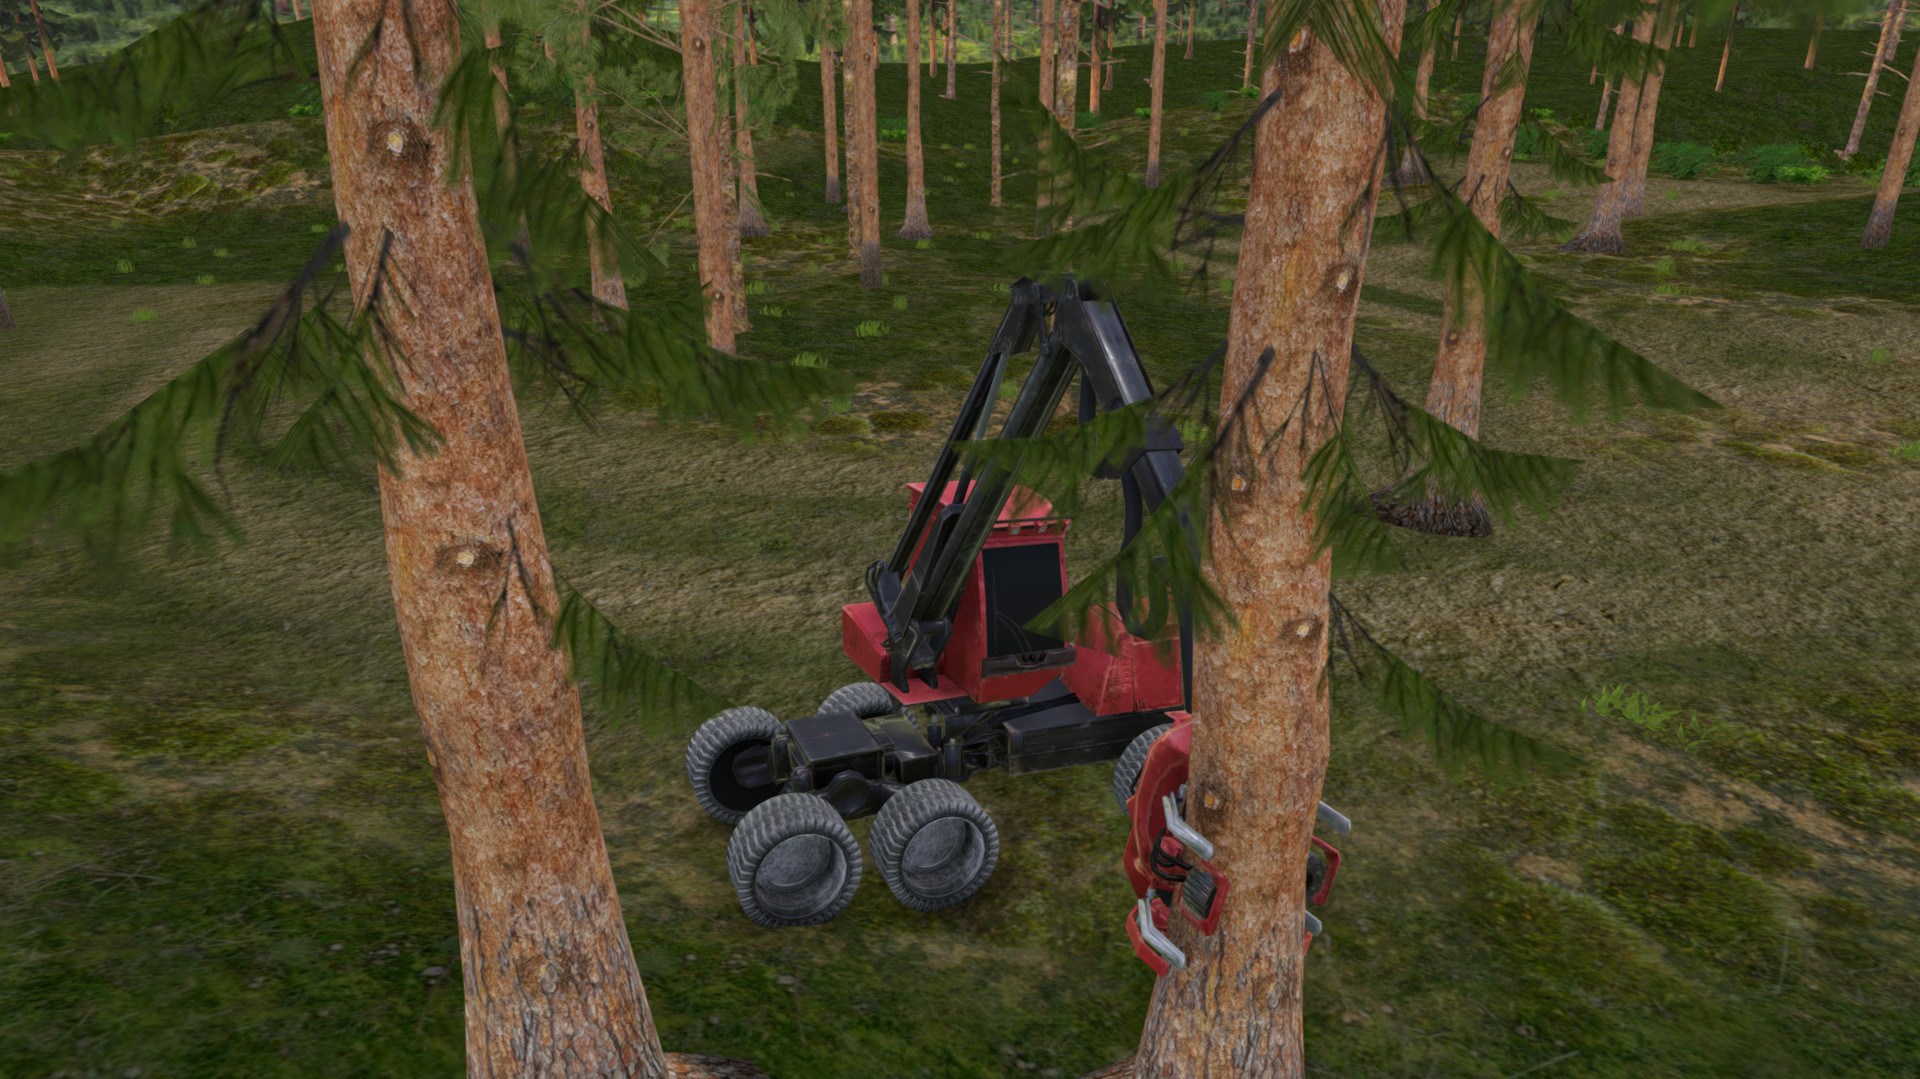 Forest Harvester Simulator